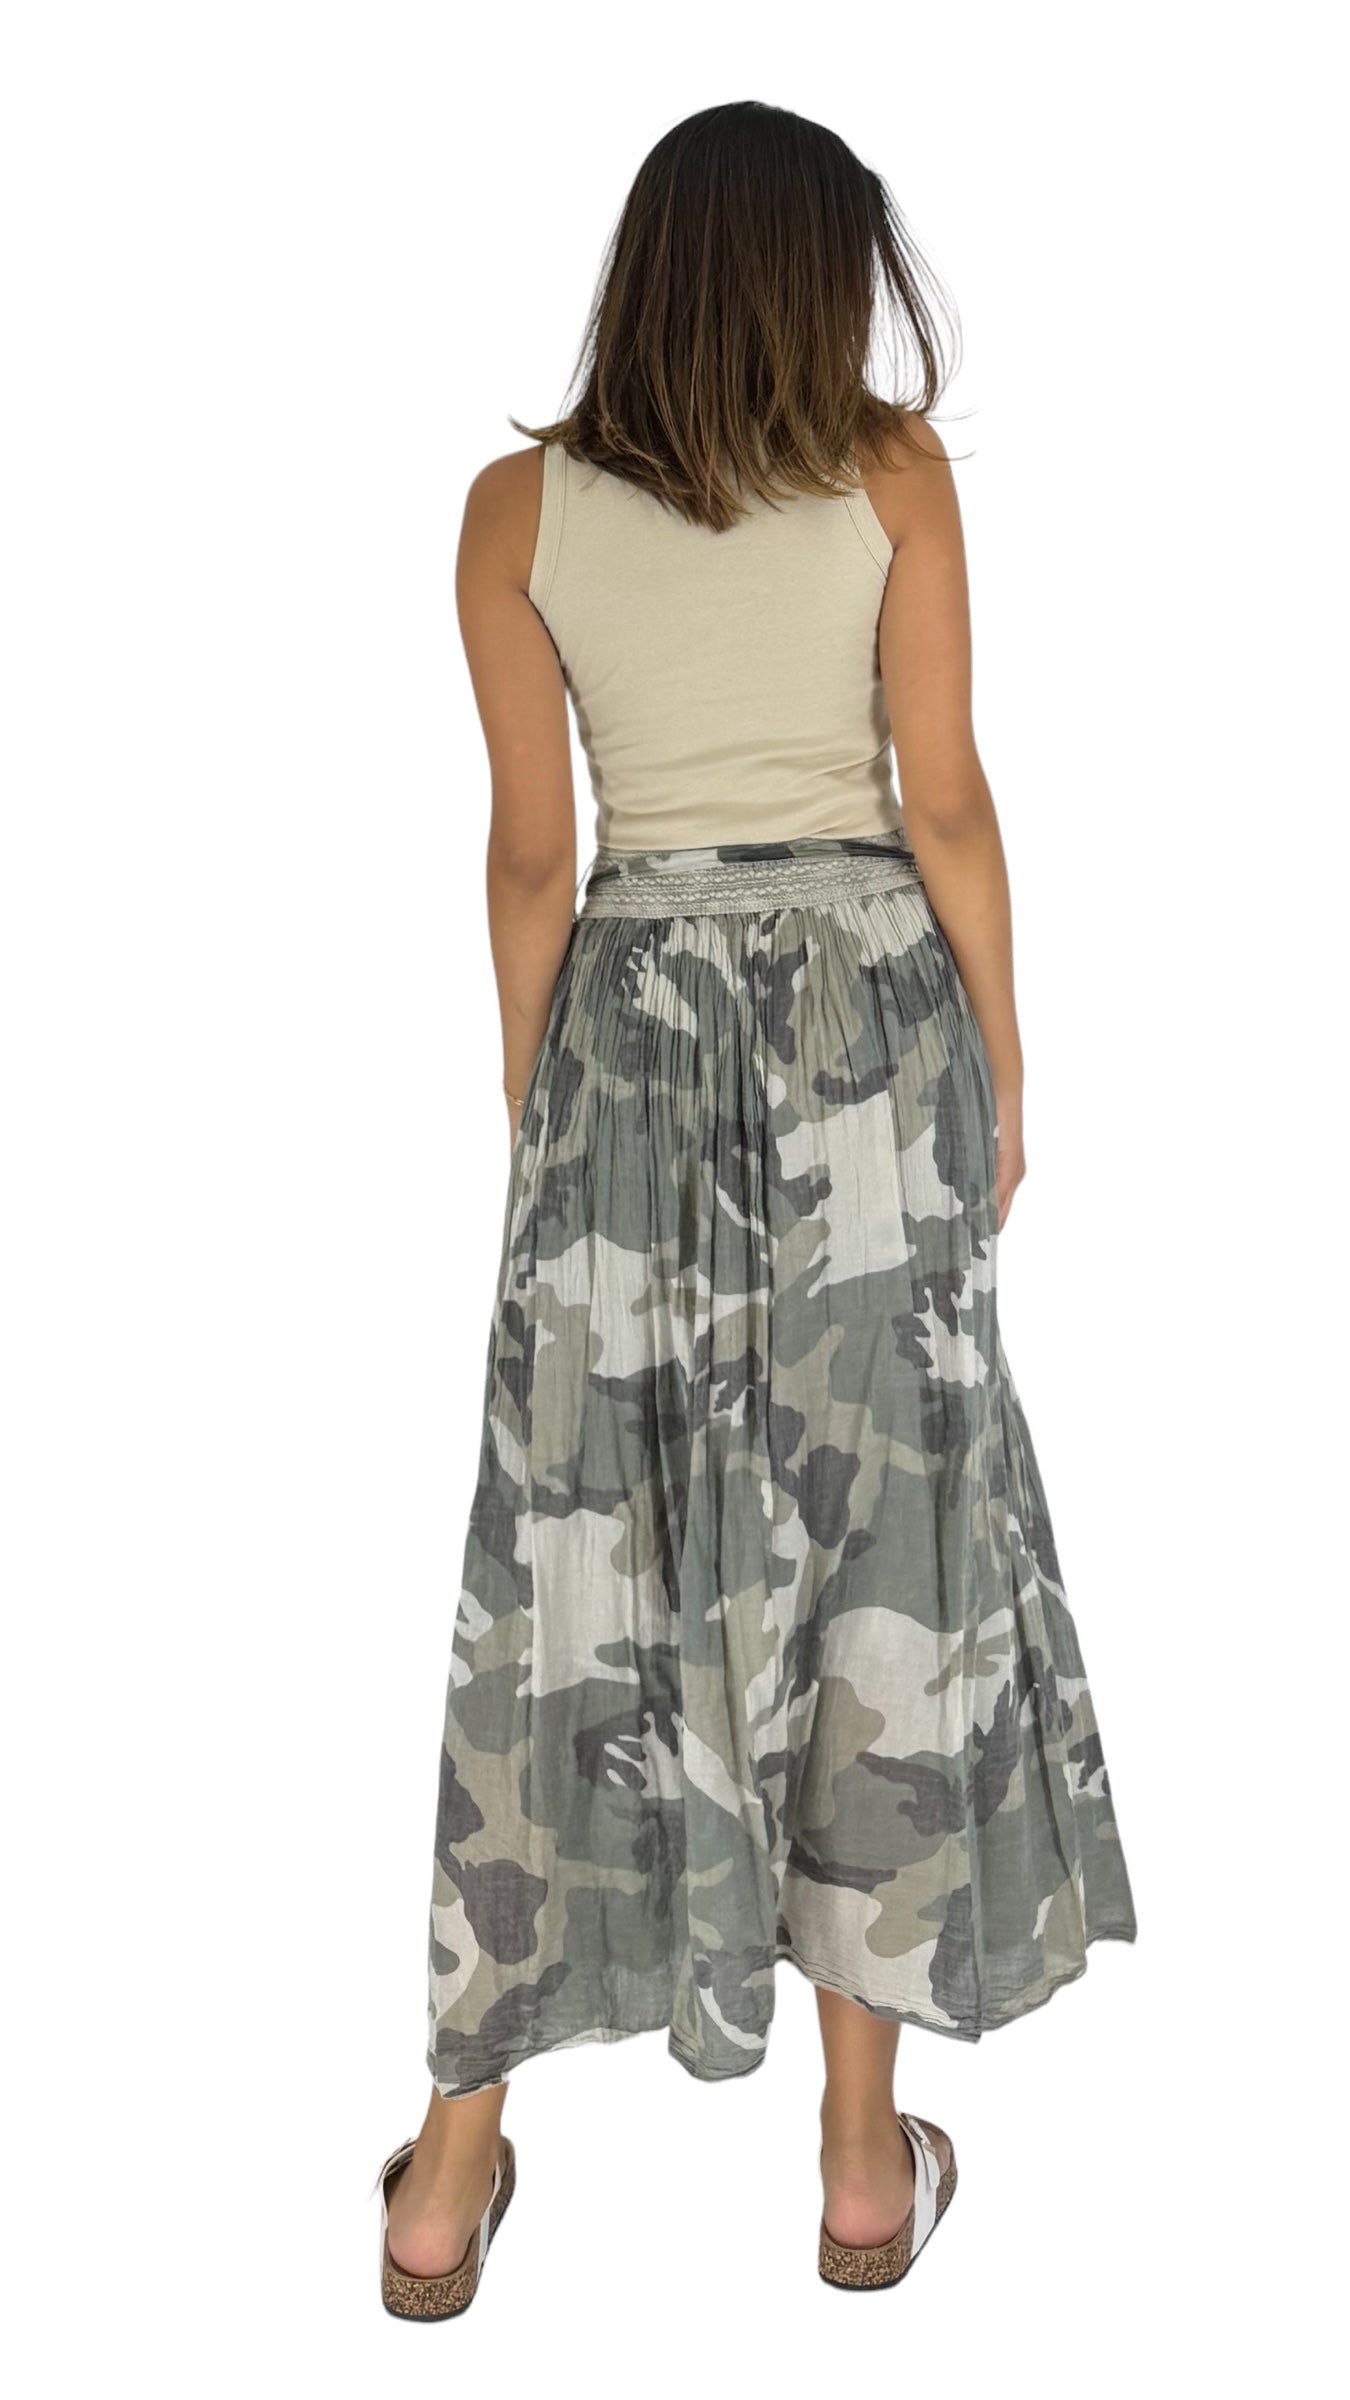 Rima camouflage skirt